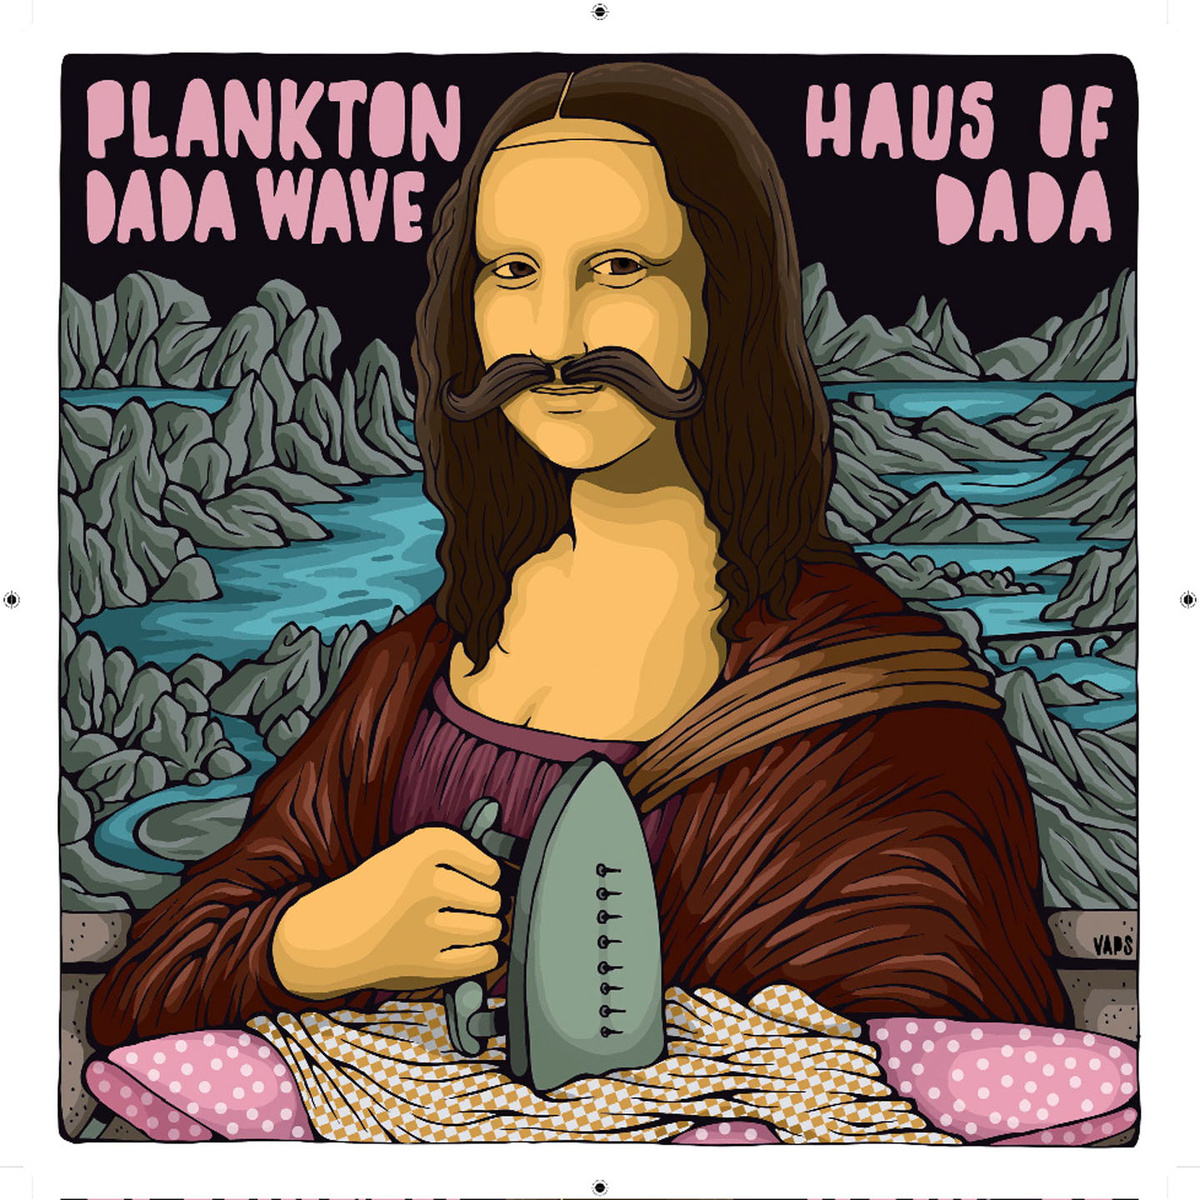 Plankton Dada Wave - Haus of Dada